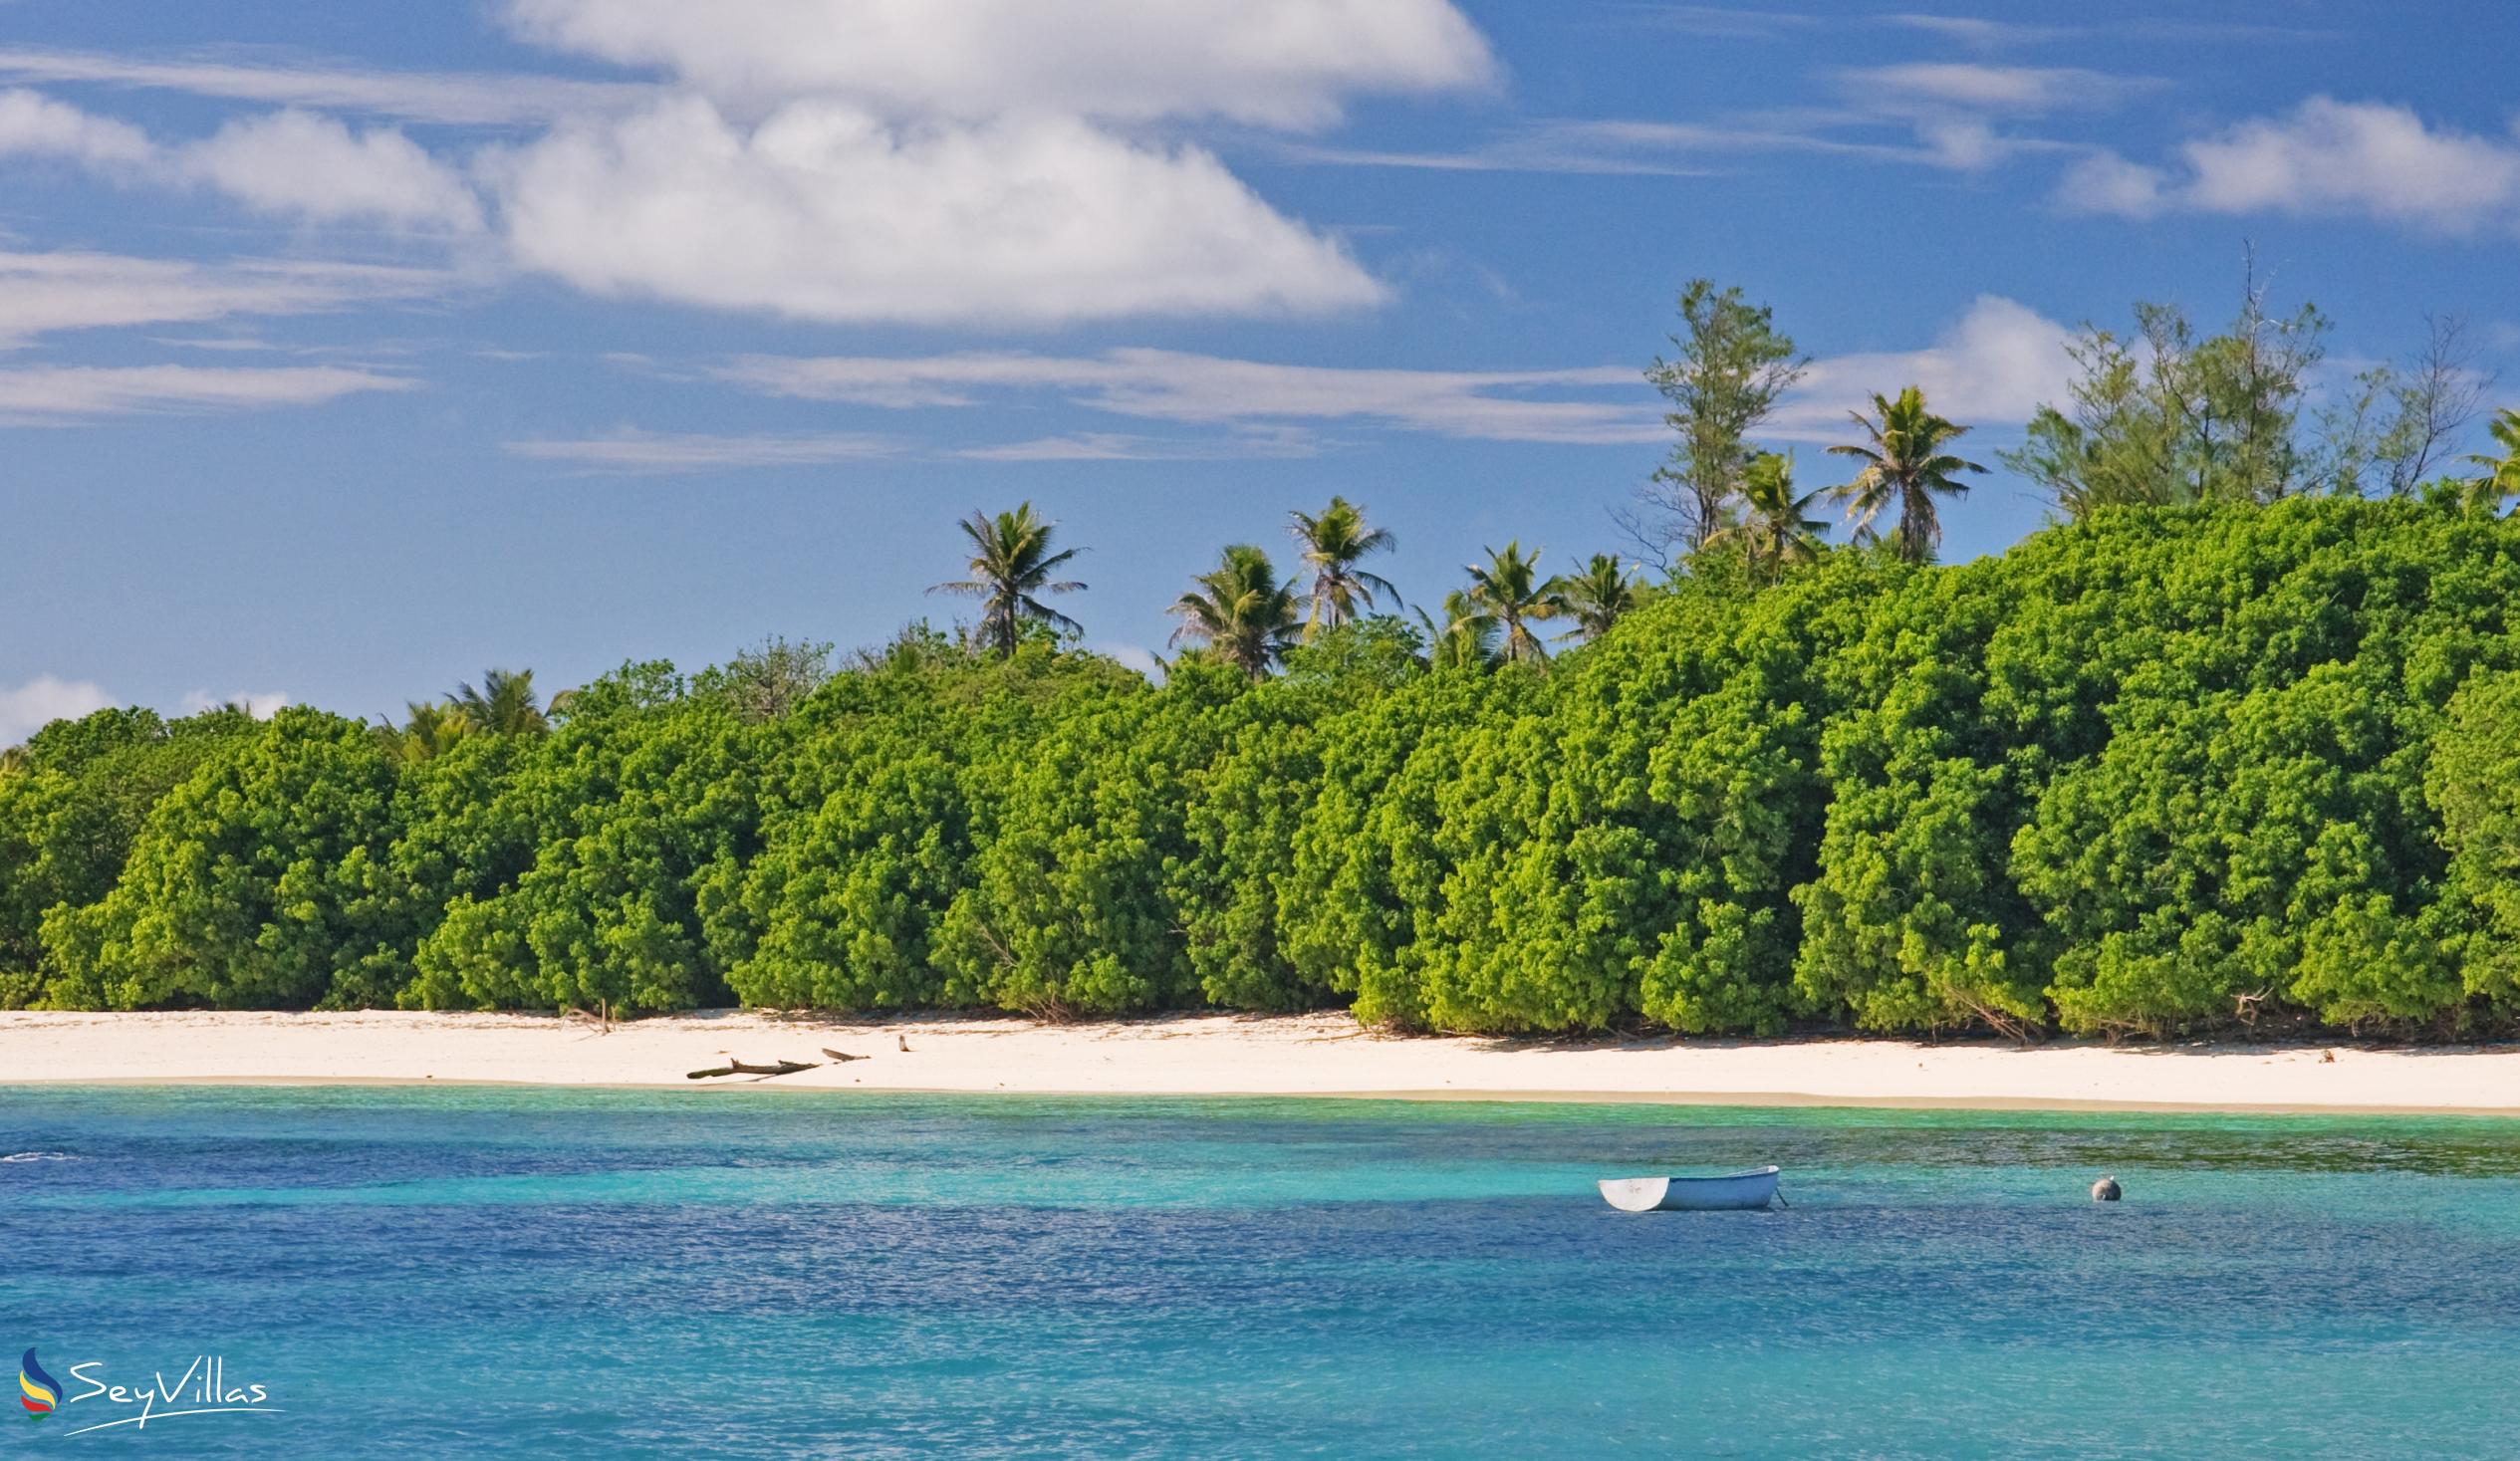 Photo 3: Bird Island Beaches - Other islands (Seychelles)